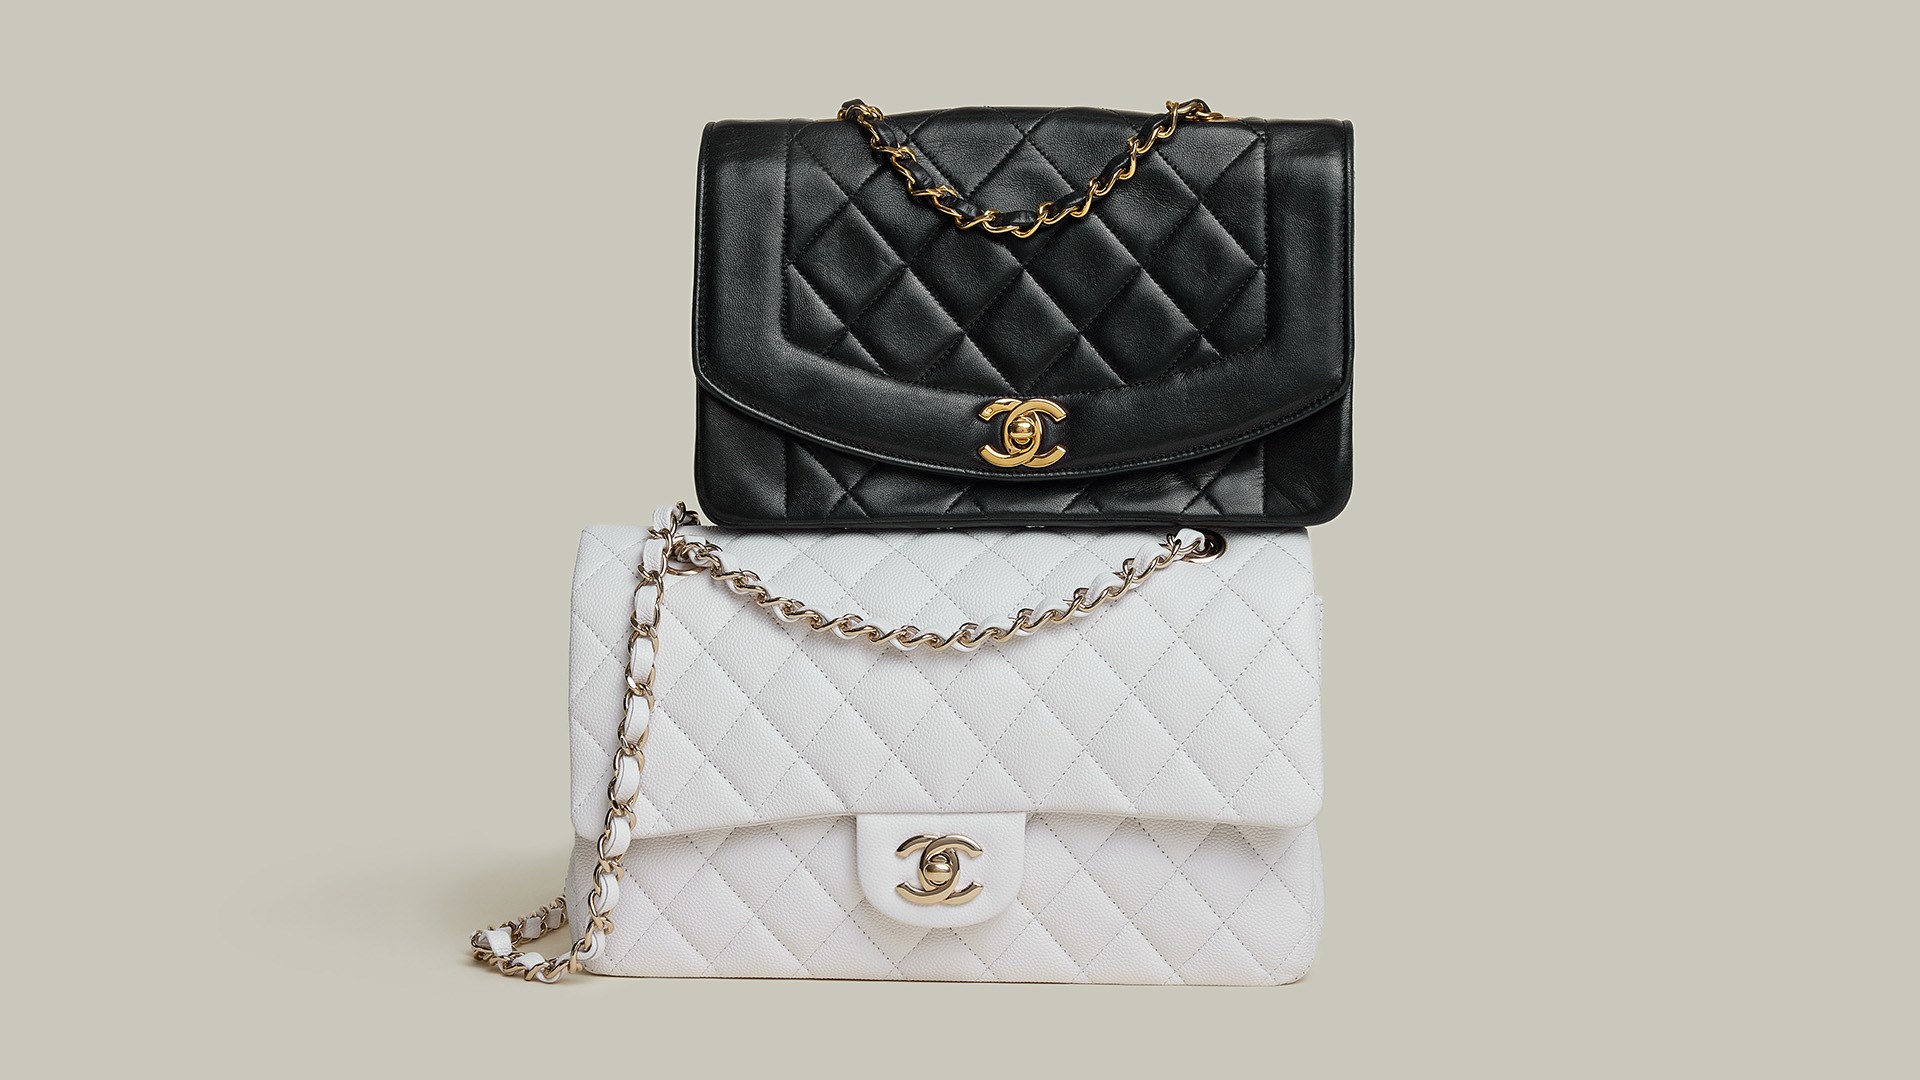 chanel classic handbag size